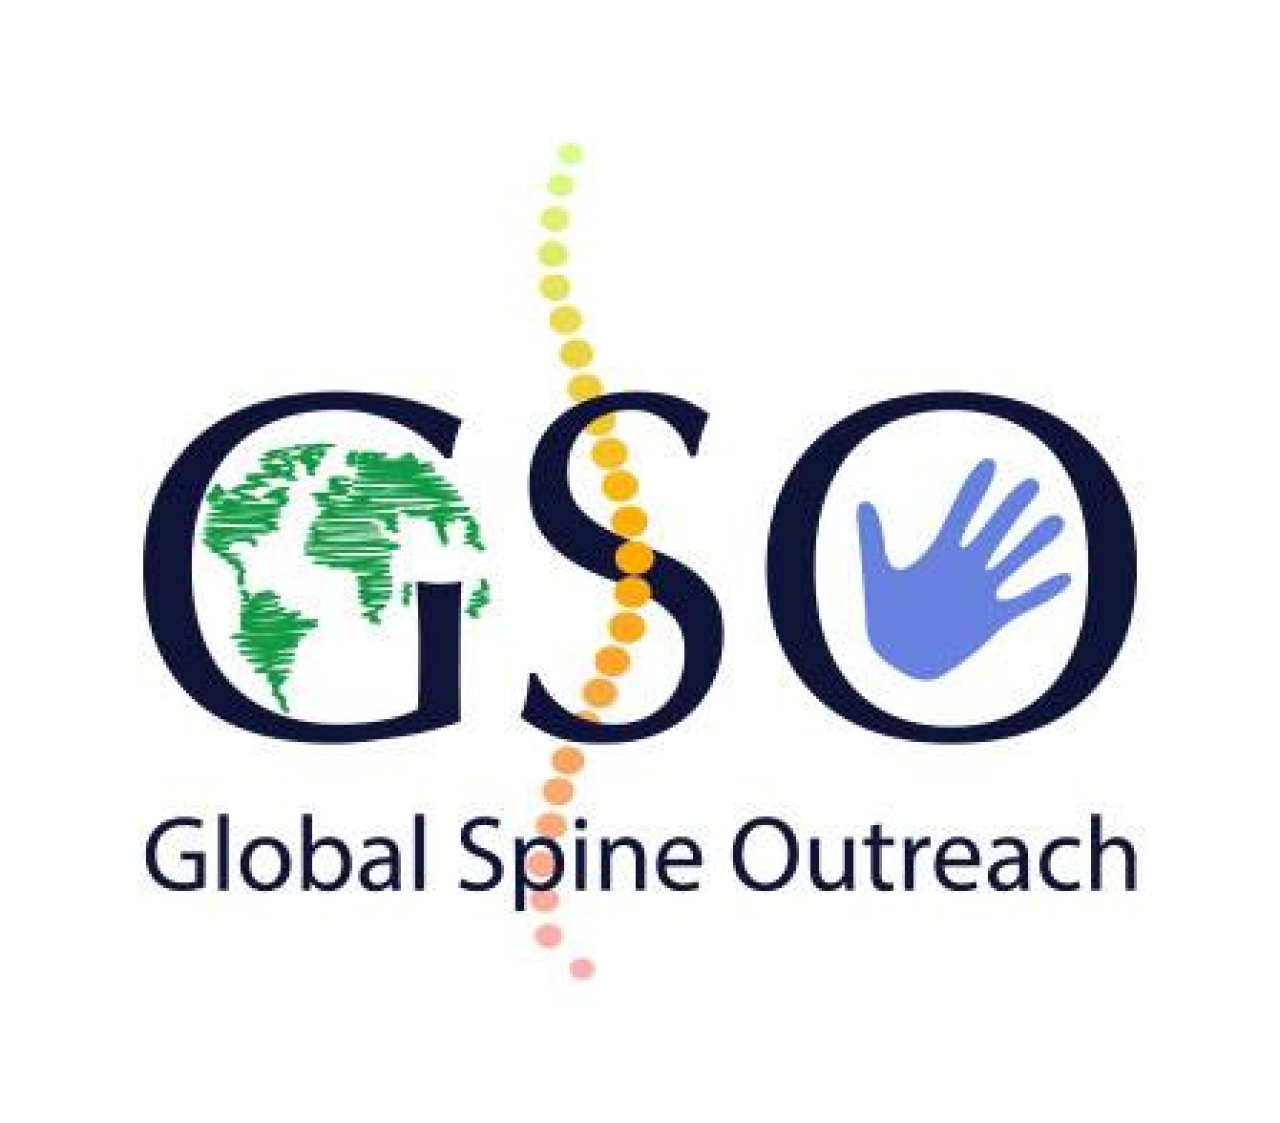 Global Spine Outreach logo.